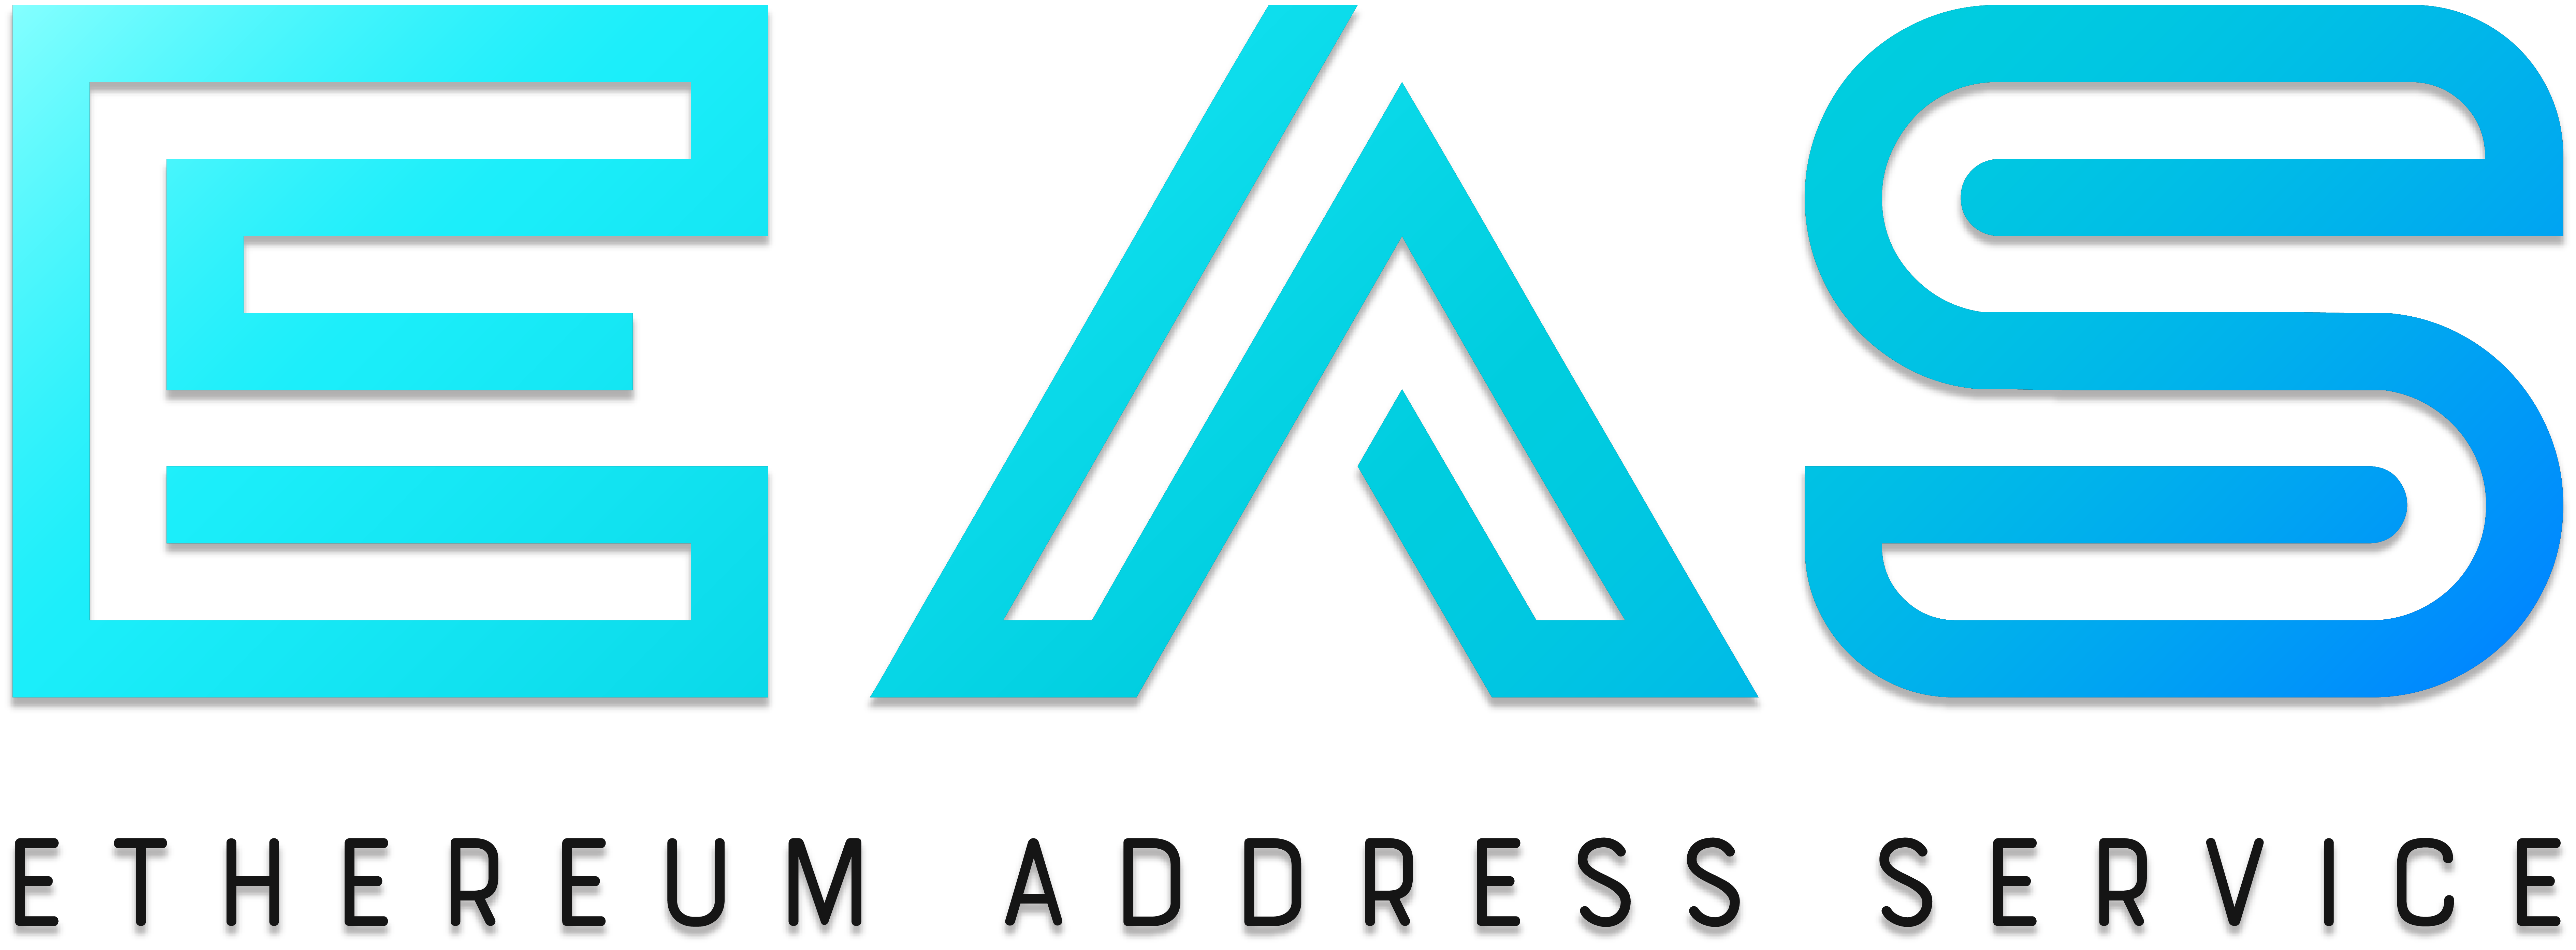 Ethereum Address Service (EAS)